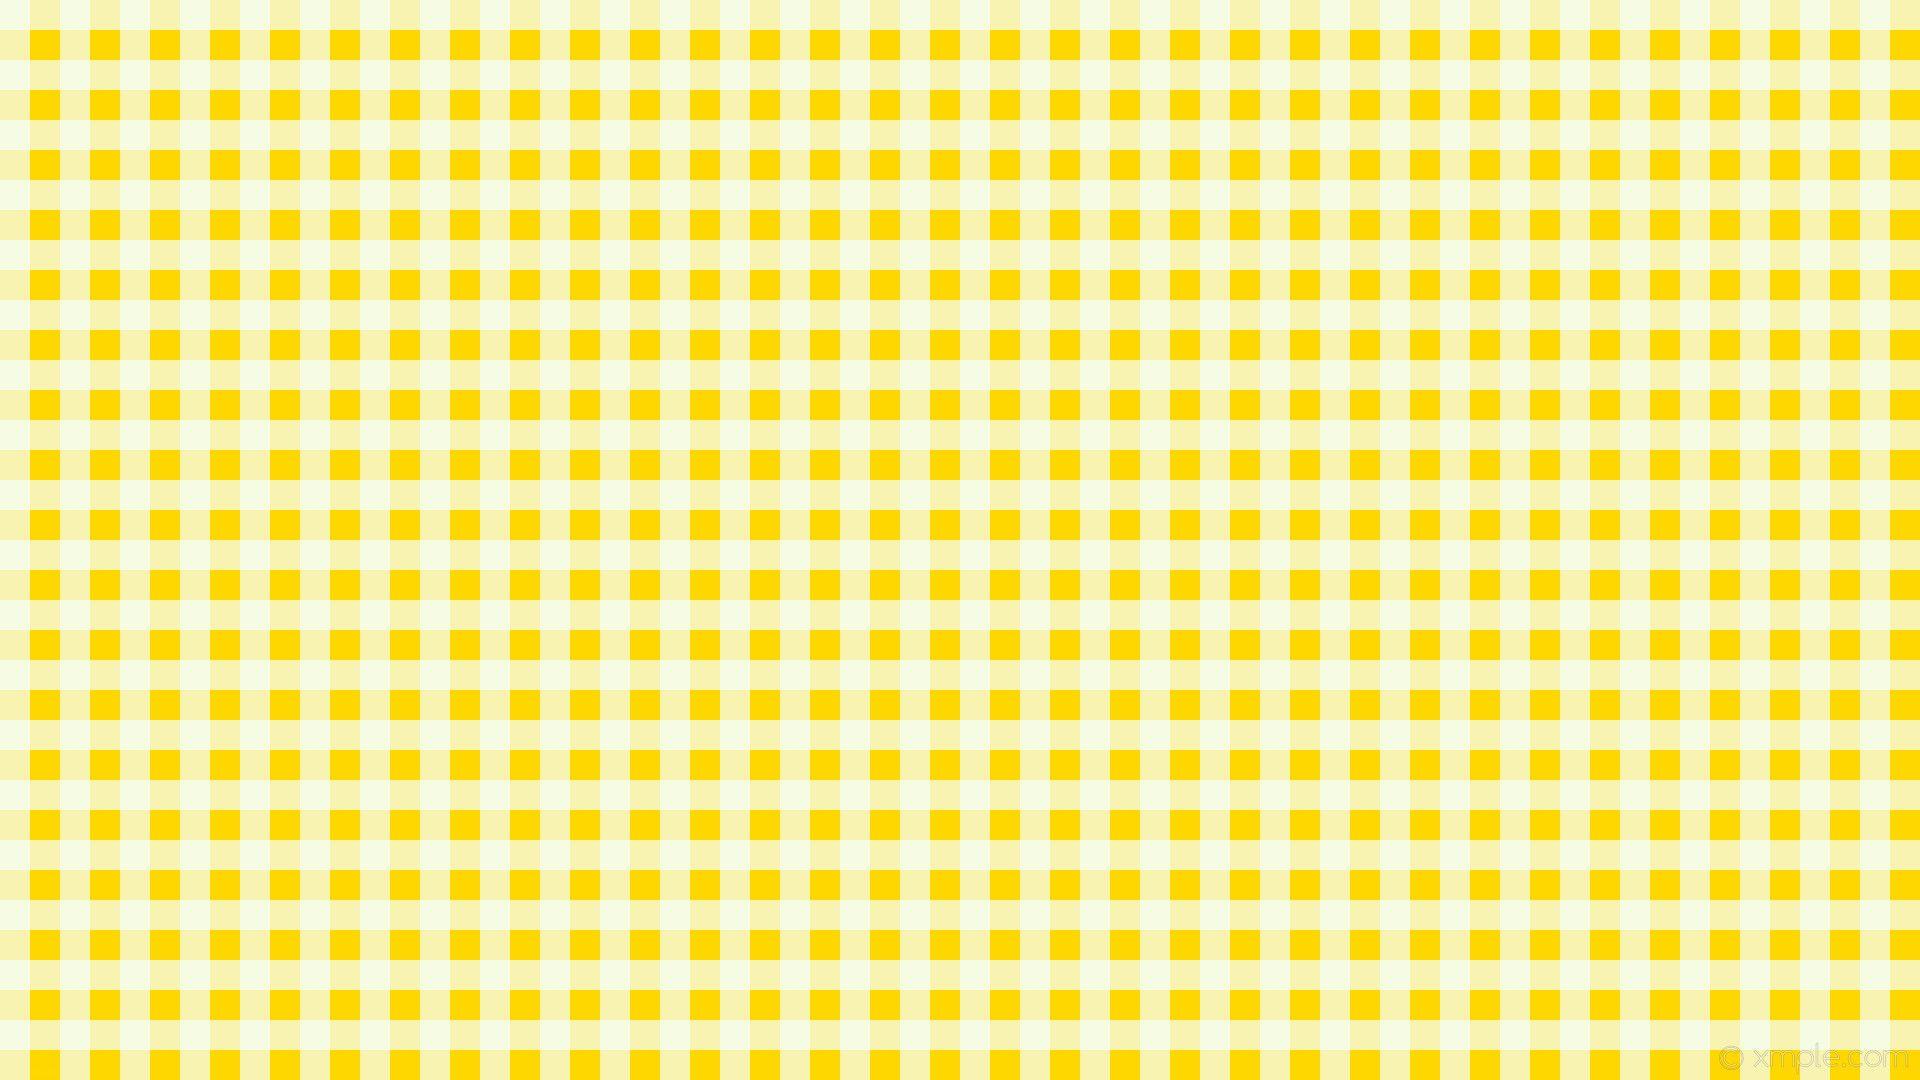 VSCO Yellow Wallpaper Free VSCO Yellow Background